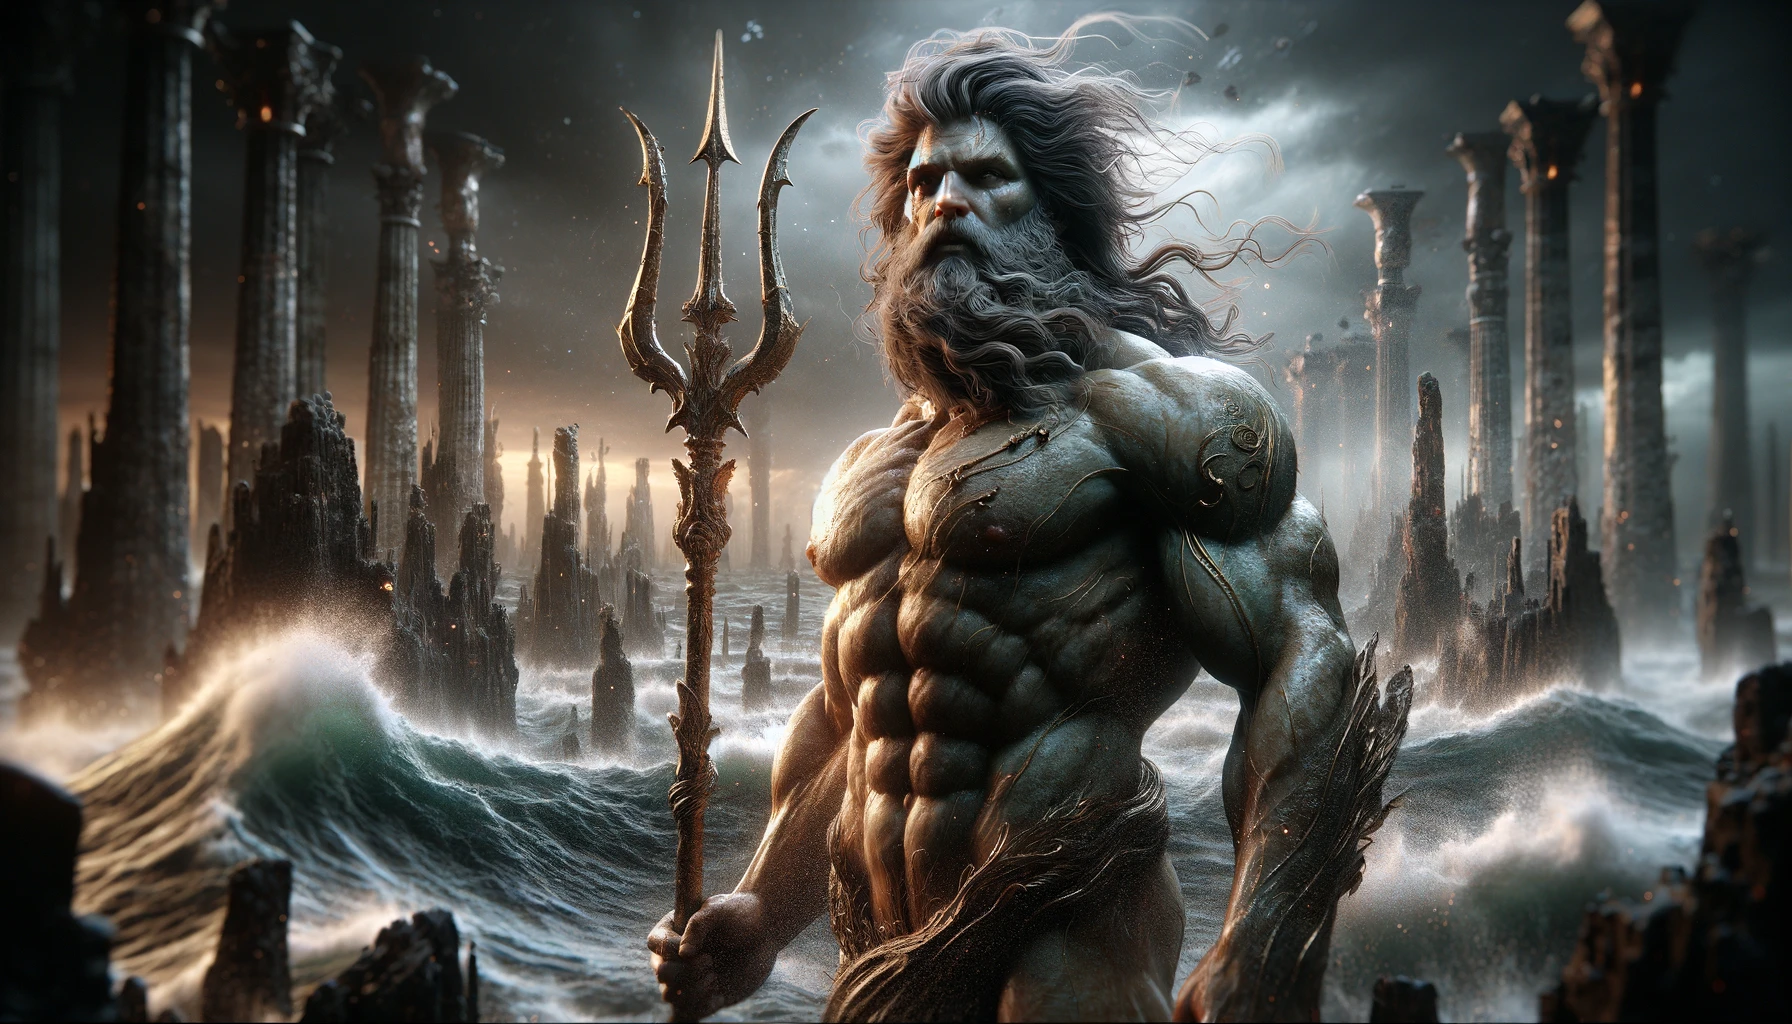 Animated Image of the Temple of Poseidon